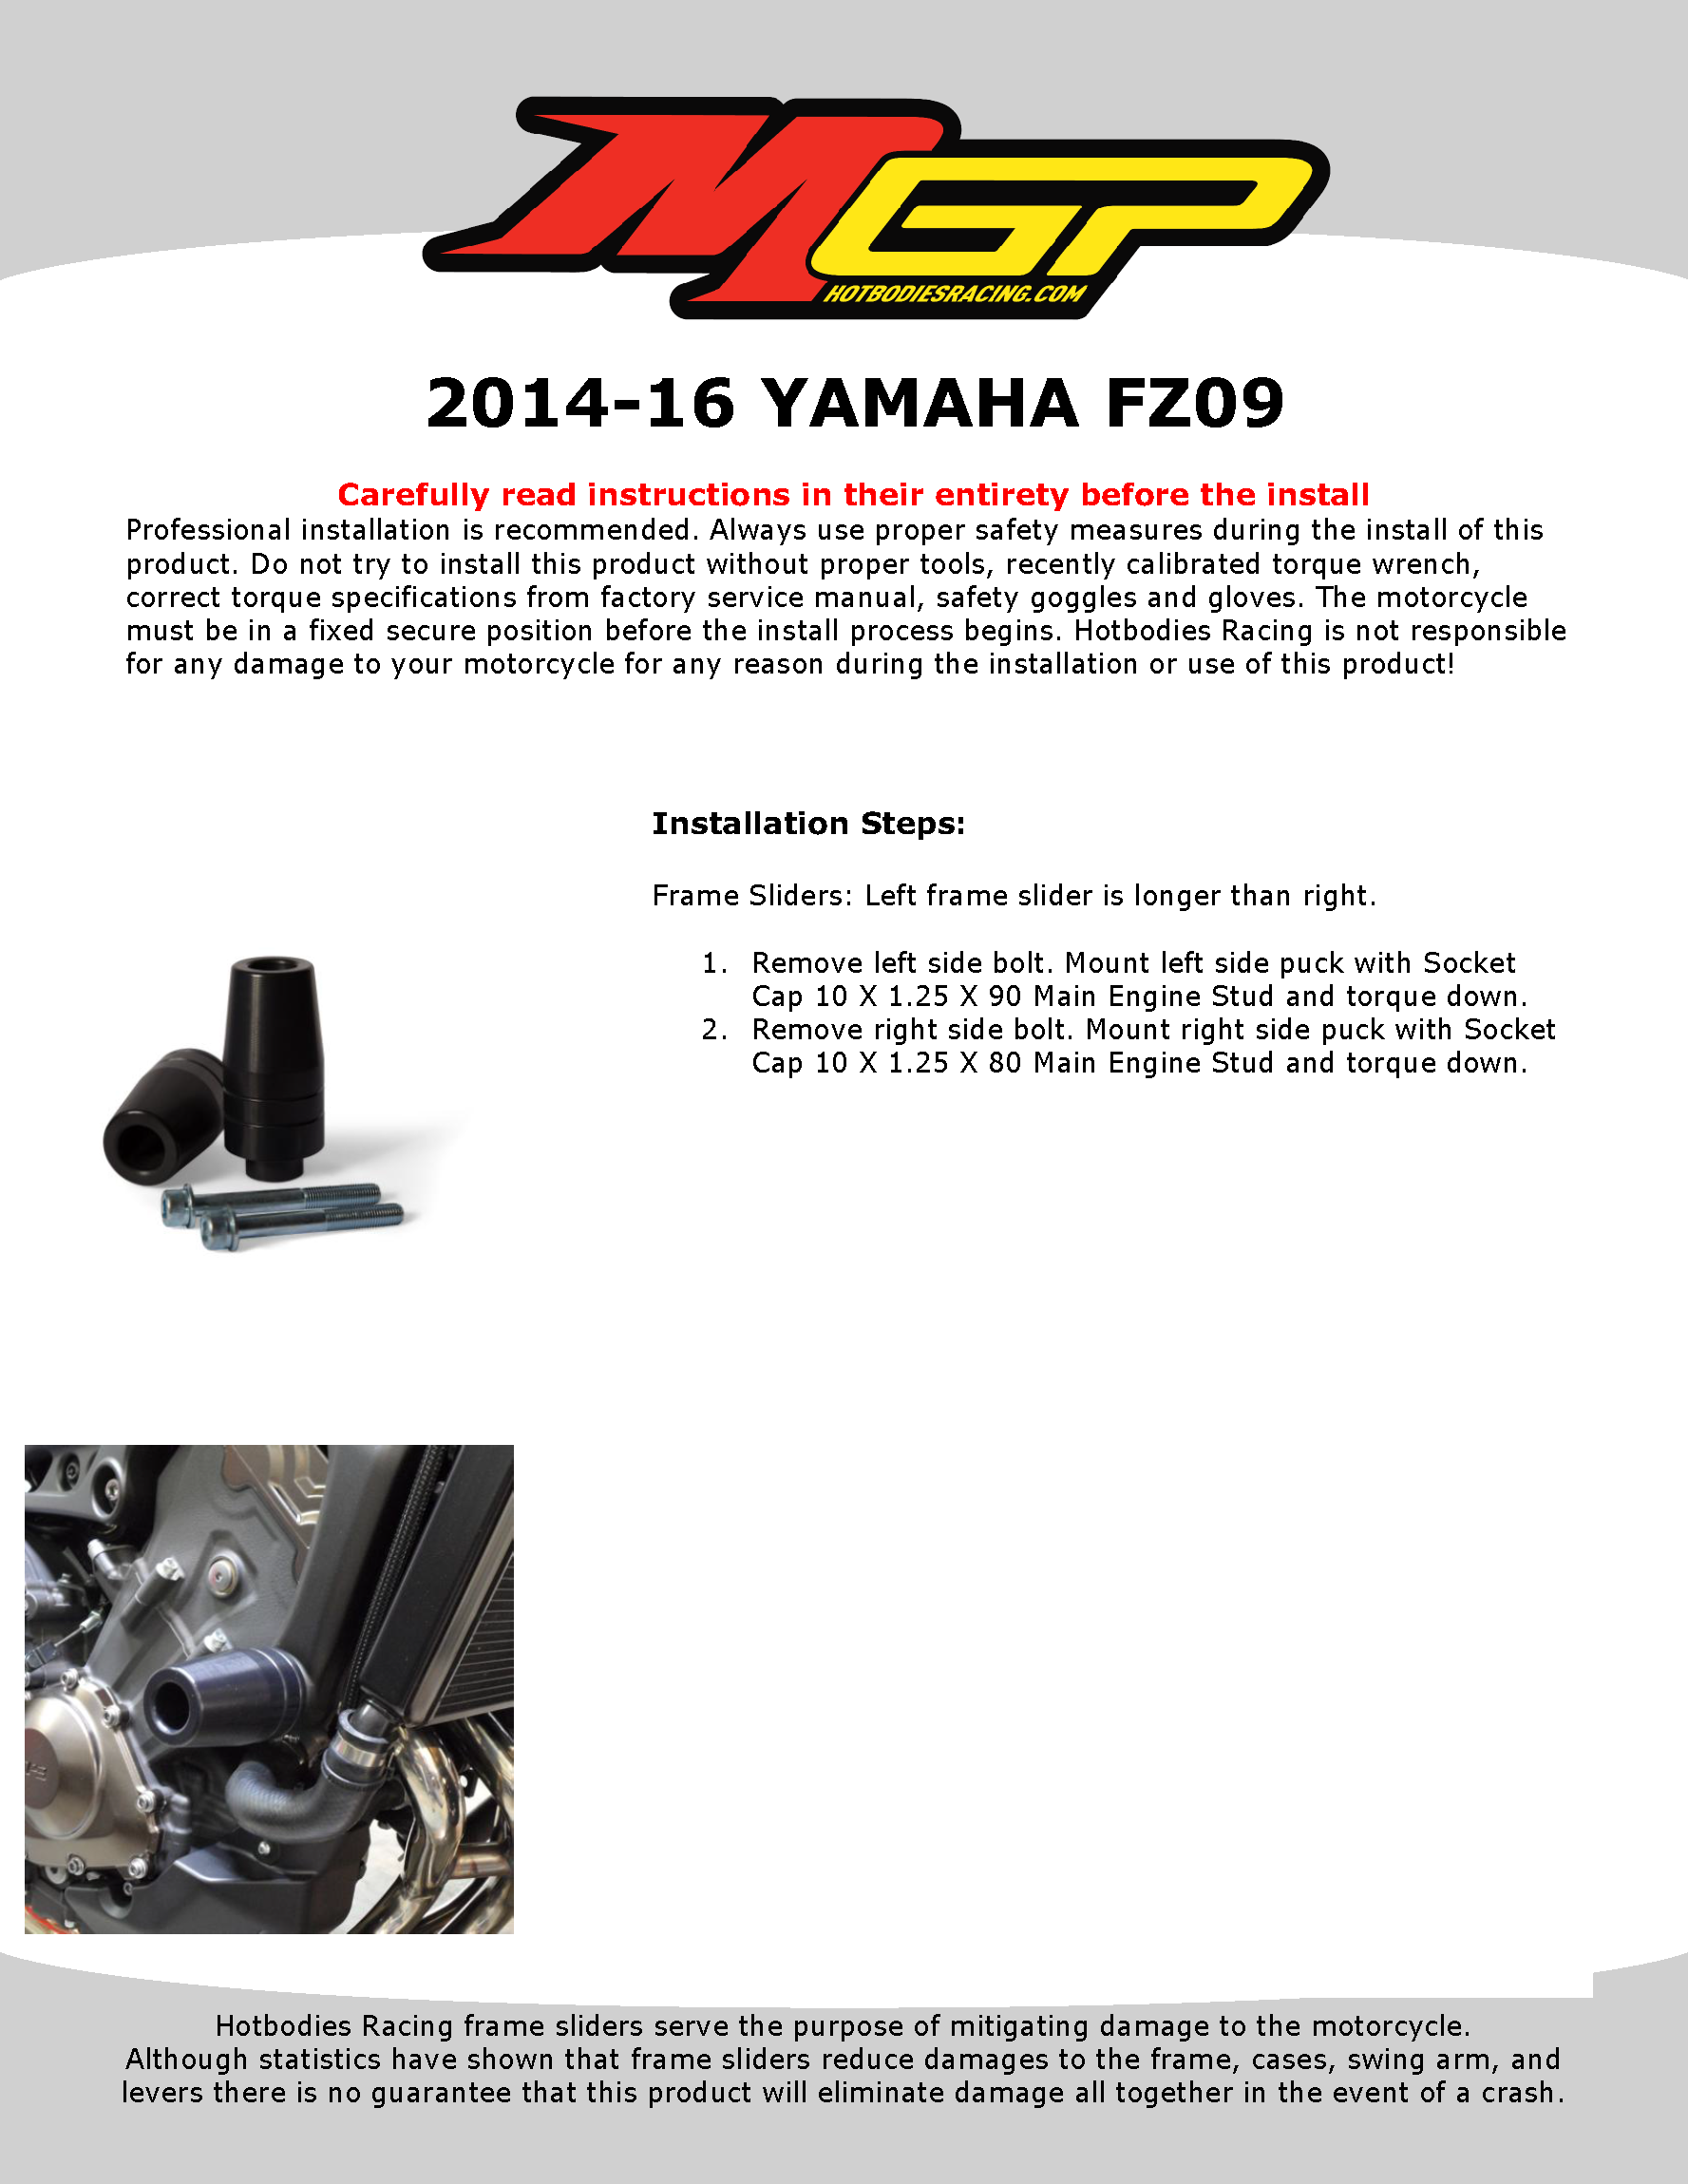 

2014-16 YAMAHA FZ09 Frame Sliders Installation

